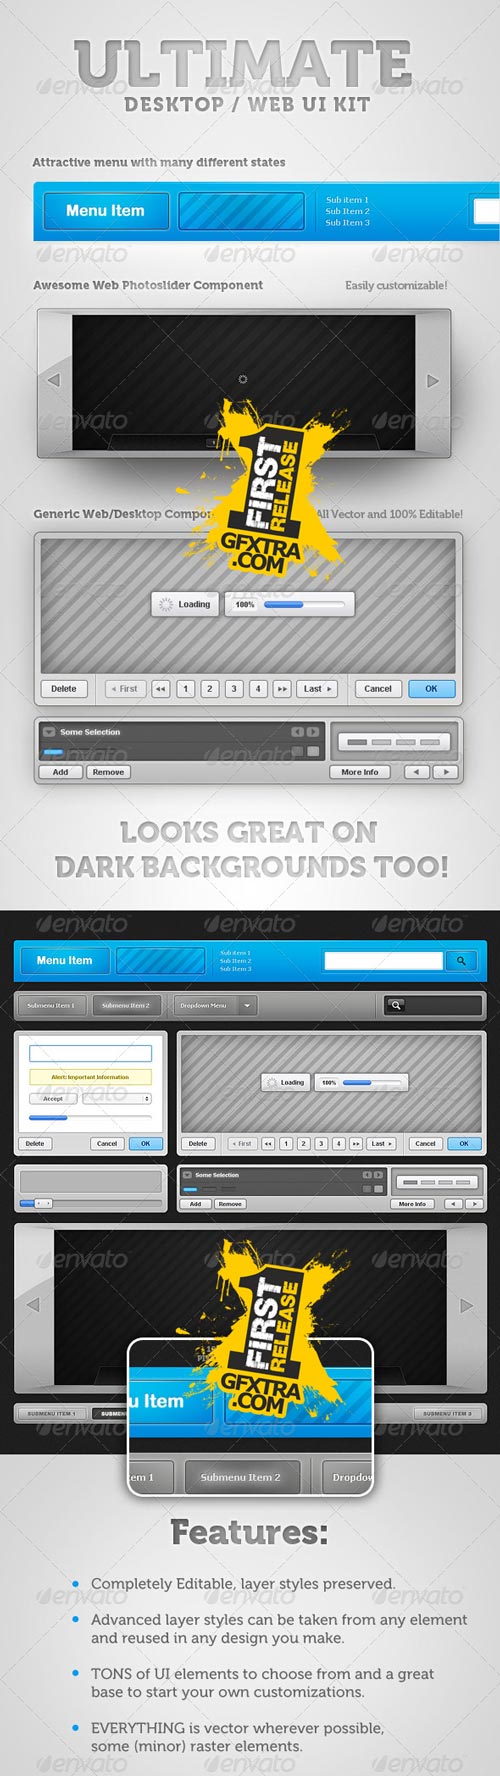 Futuremotion Ultimate Web UI Kit - GraphicRiver